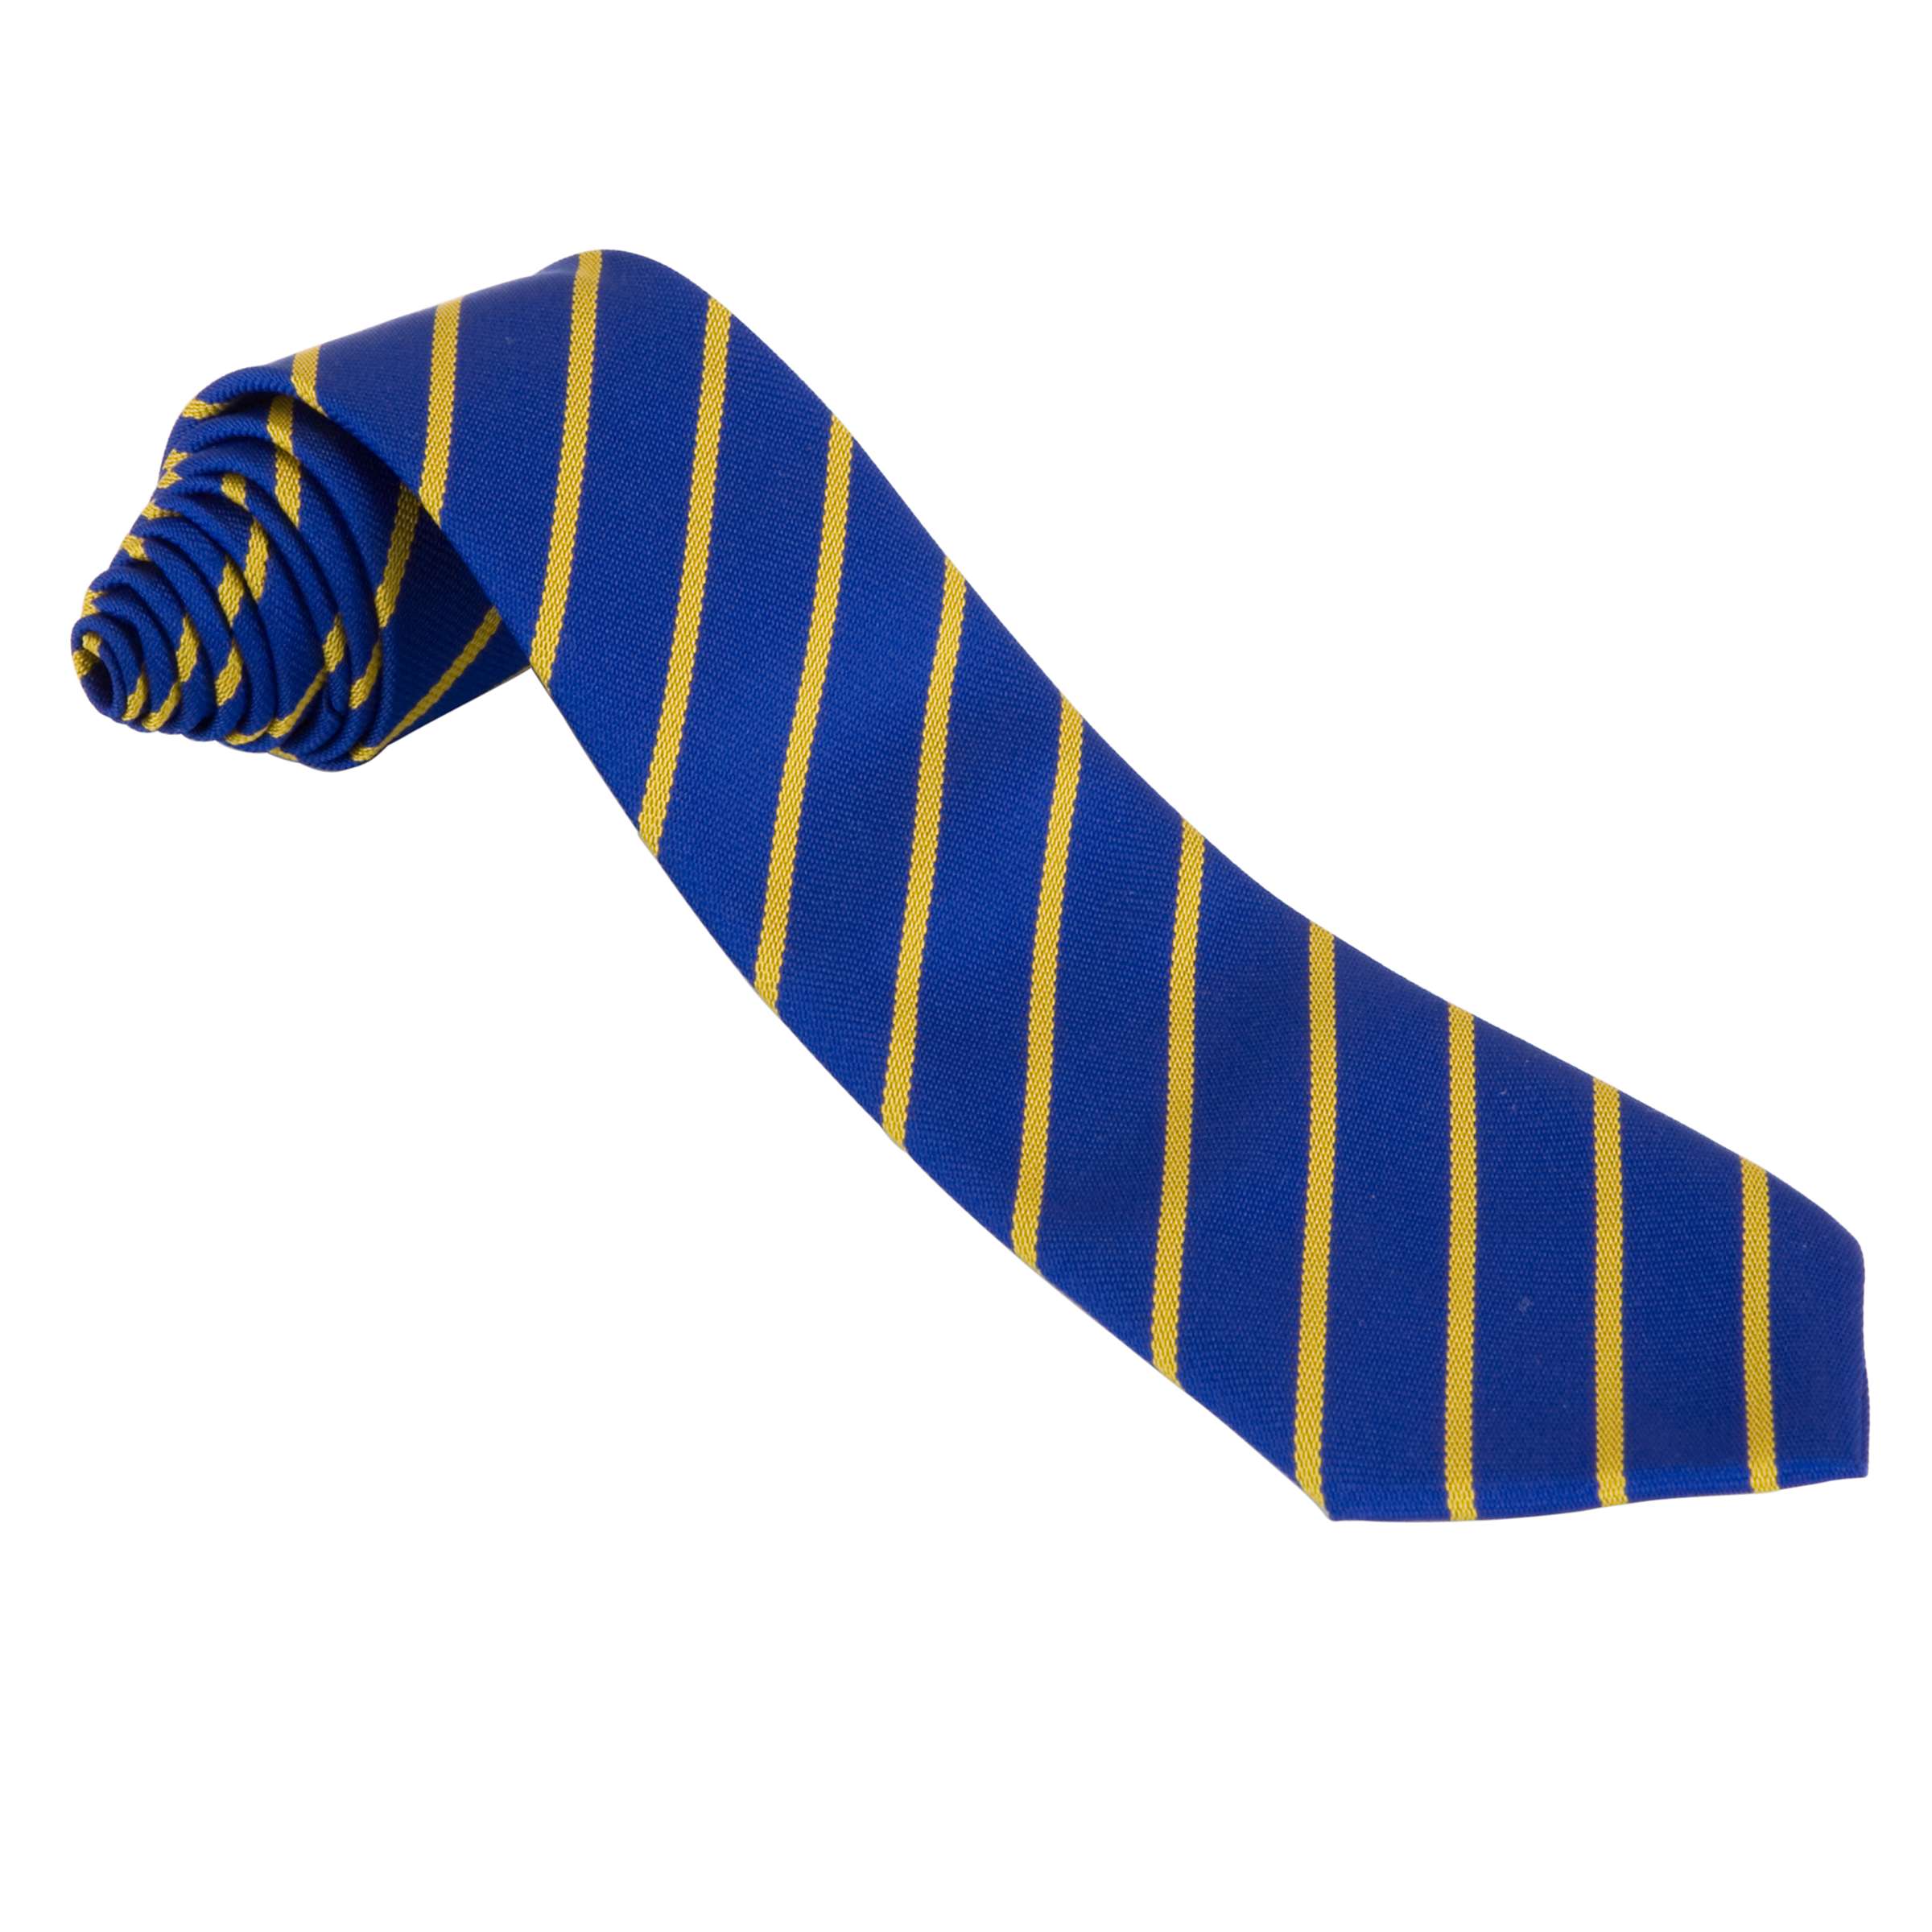 Buy Unisex Striped School Tie, Blue/Gold Online at johnlewis.com